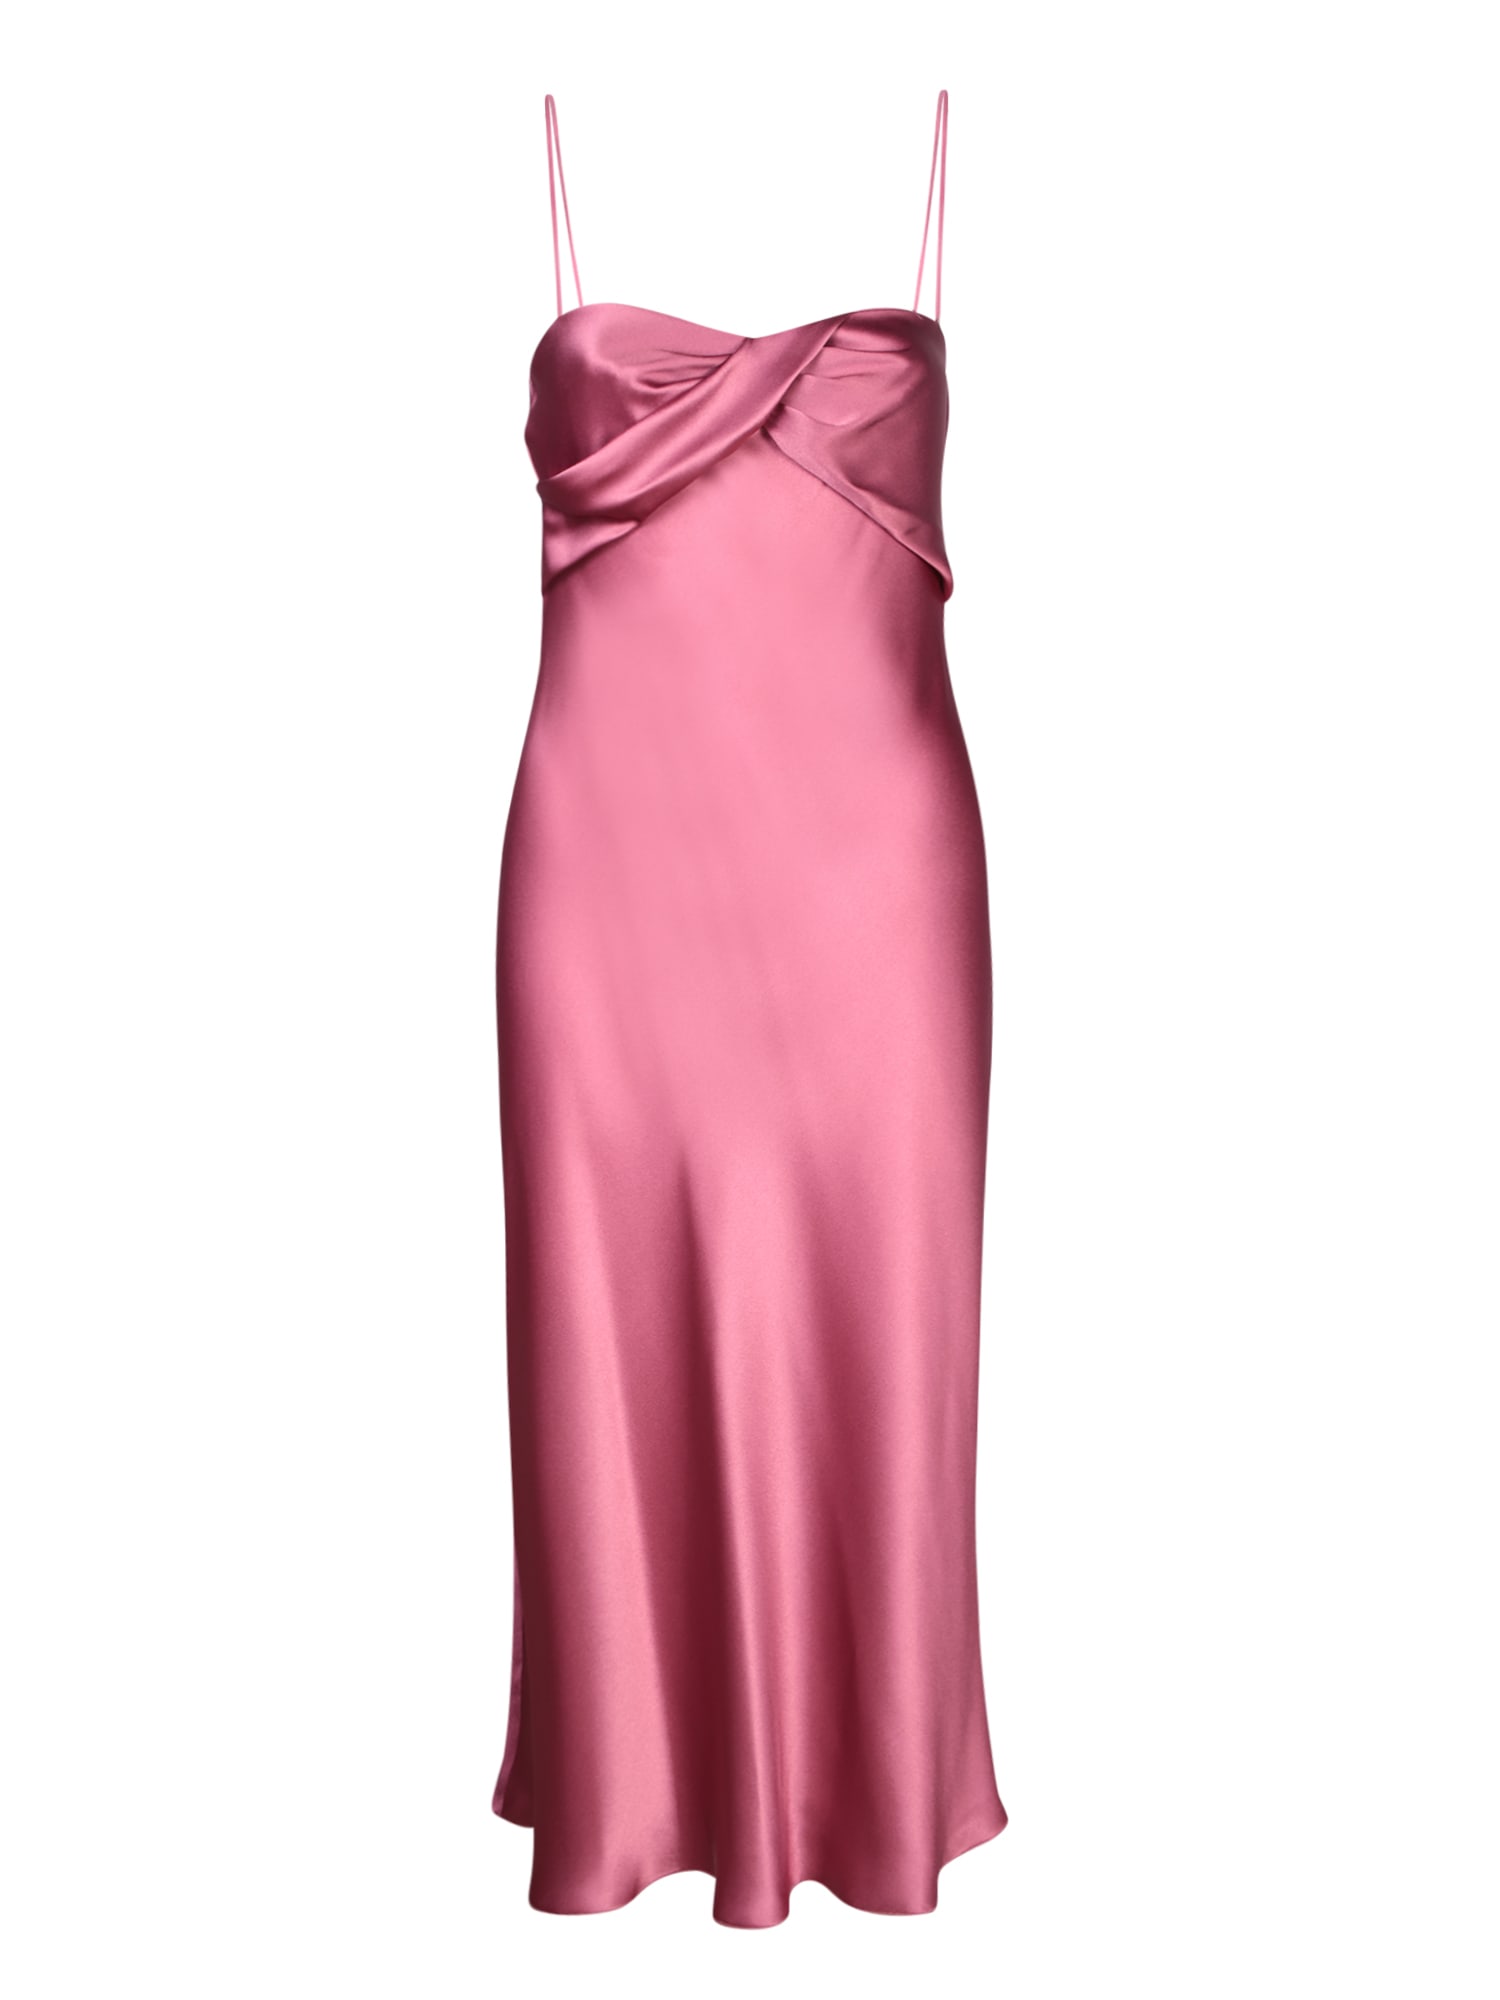 Antique Pink Slip Dress